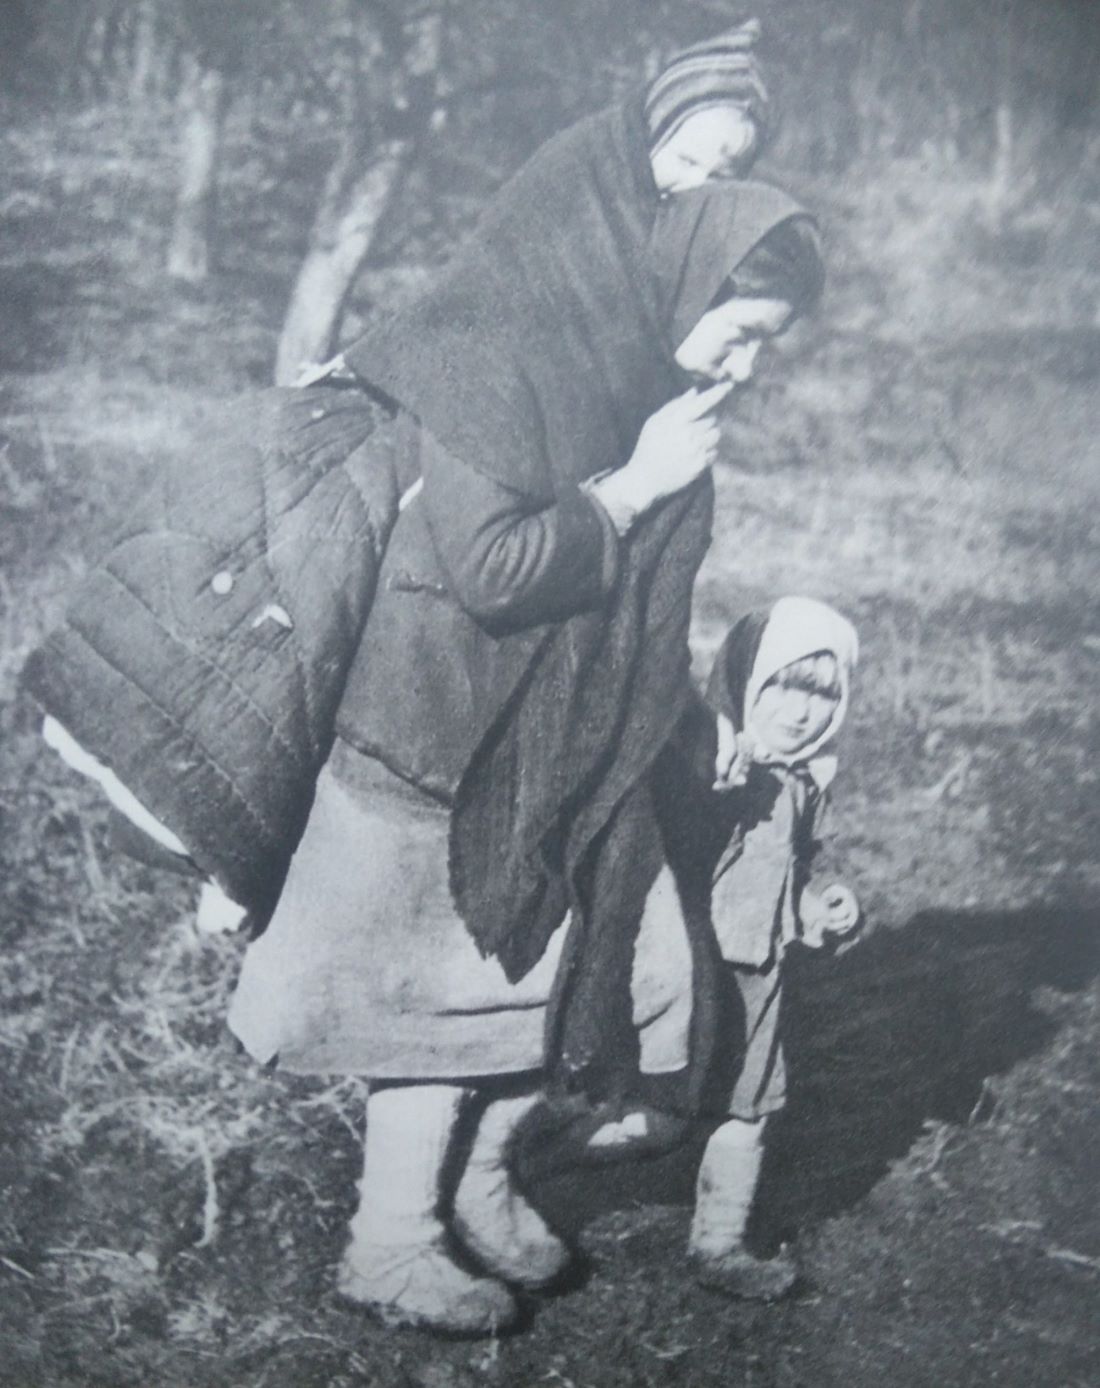 "Mother from Knežpolje," a famous photograph by Žorž Skirigin.